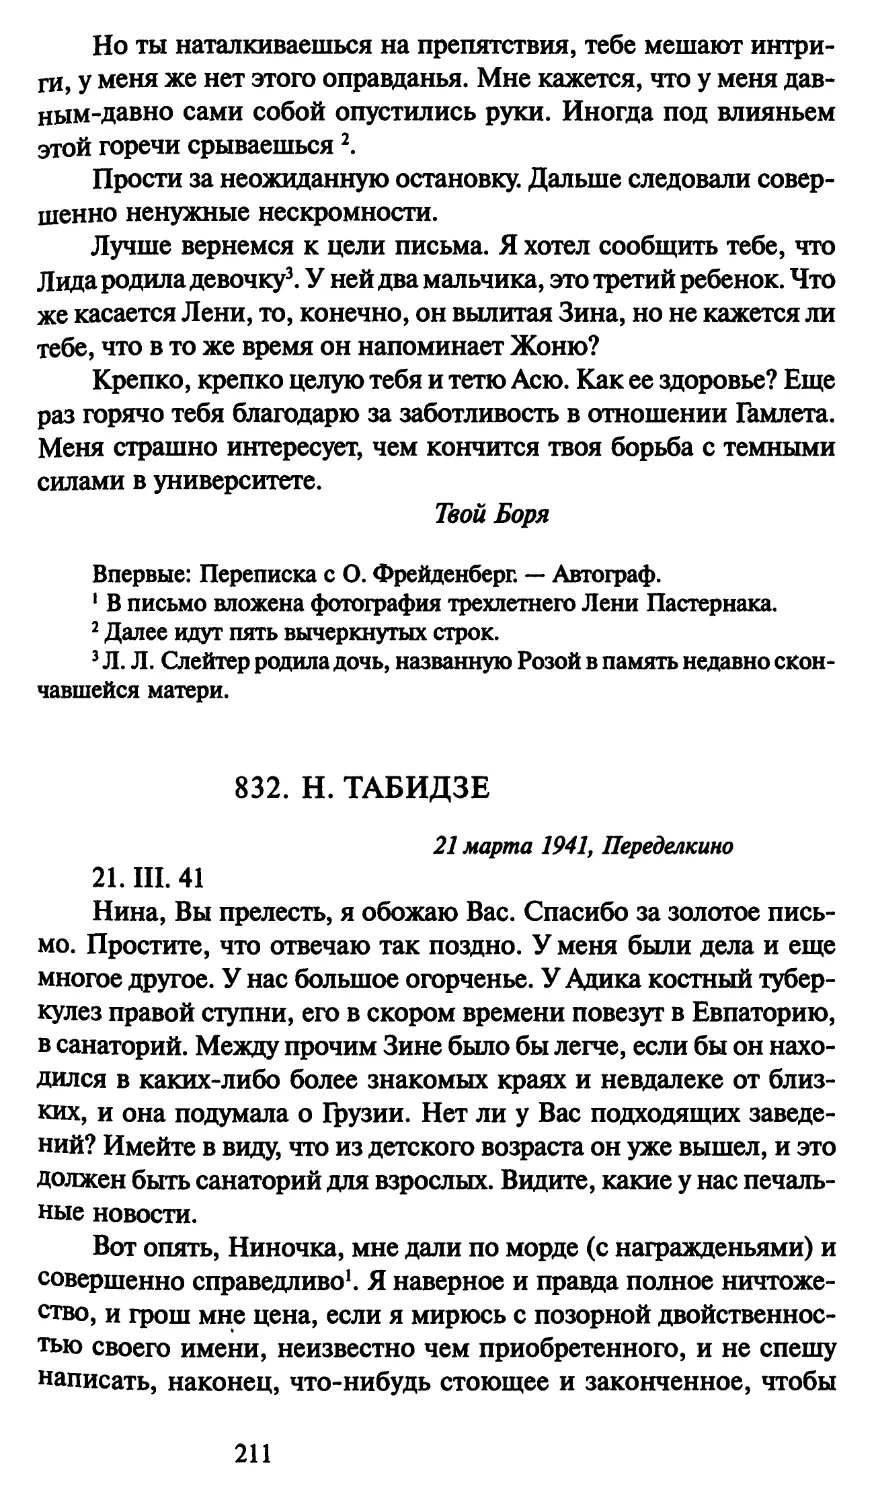 832. Н. Табидзе 21 марта 1941